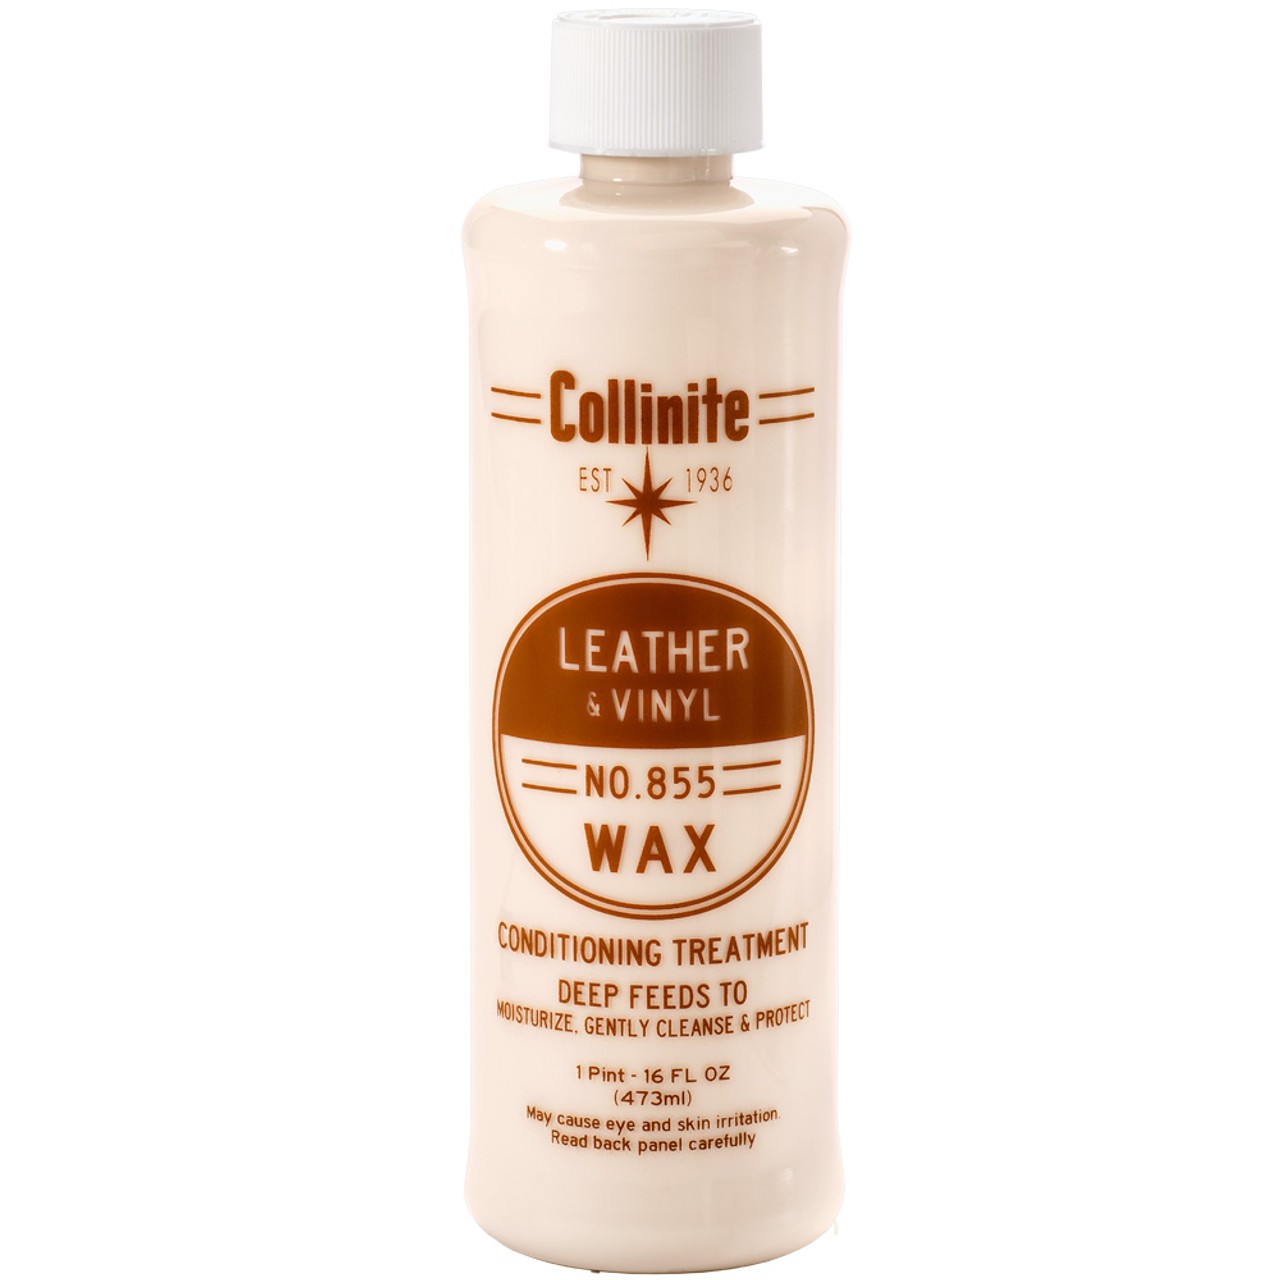 Collinite Leather and Vinyl Wax 473ml